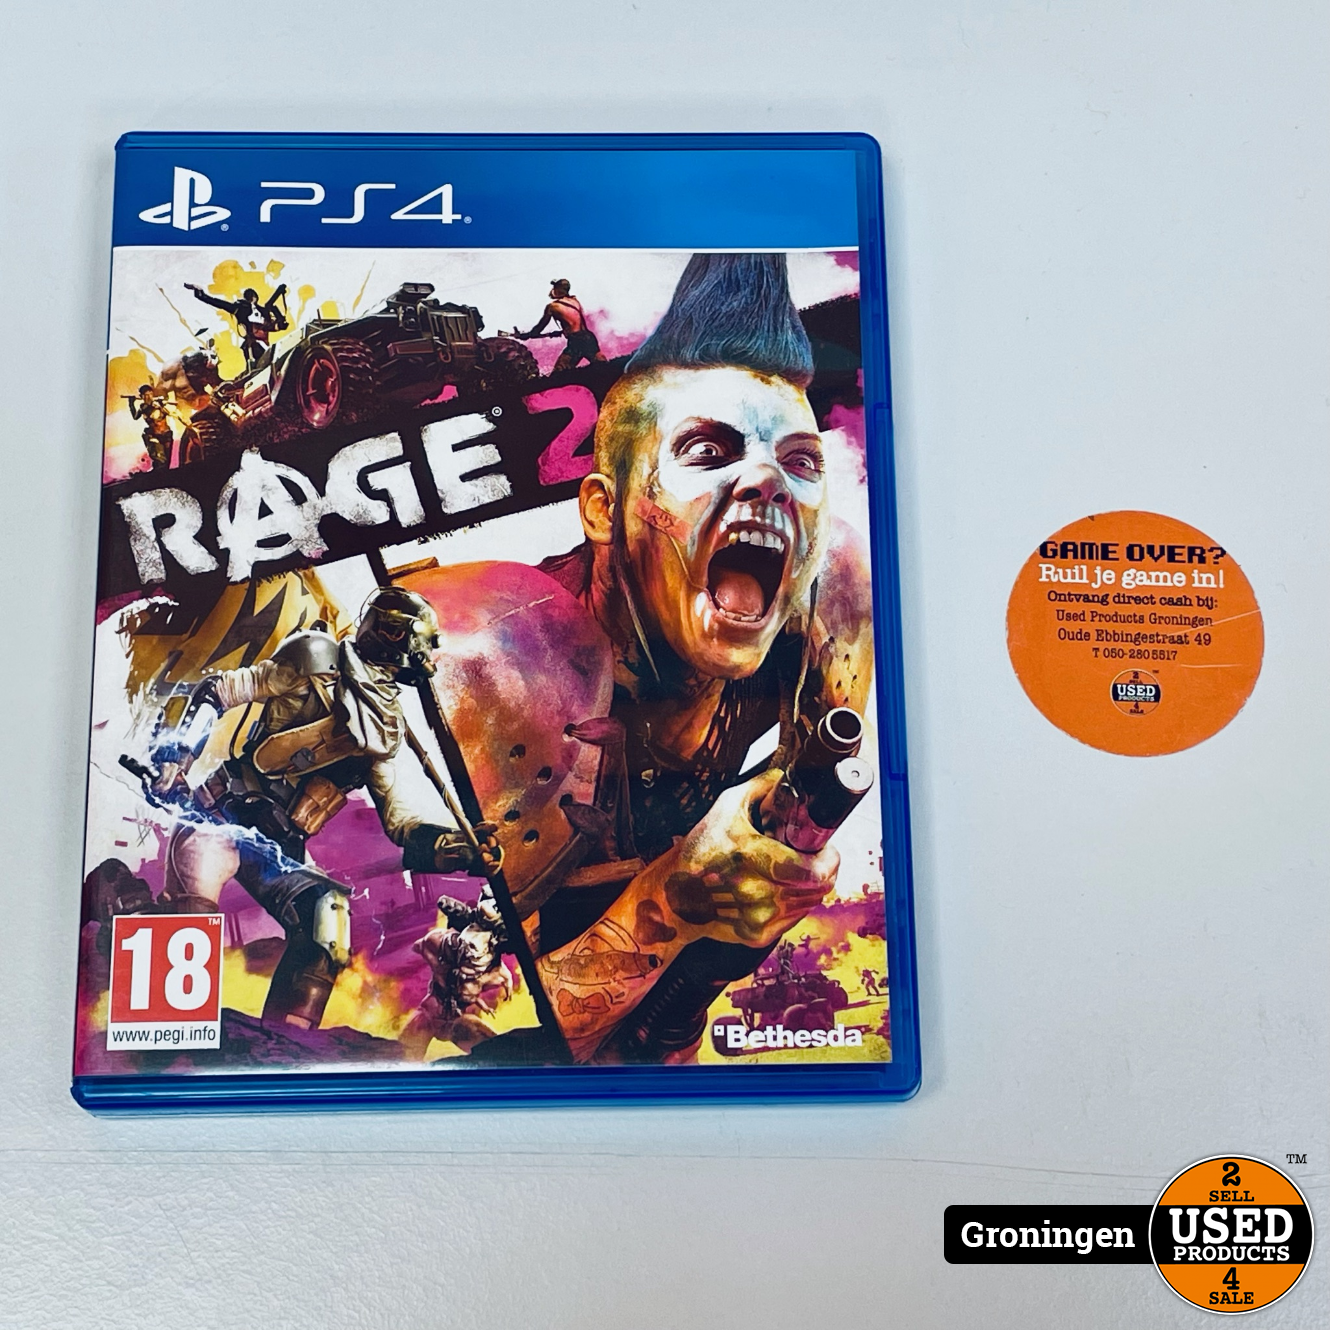 Ver weg aanwijzing beroemd Sony PS4 [PS4] RAGE 2 - Used Products Groningen